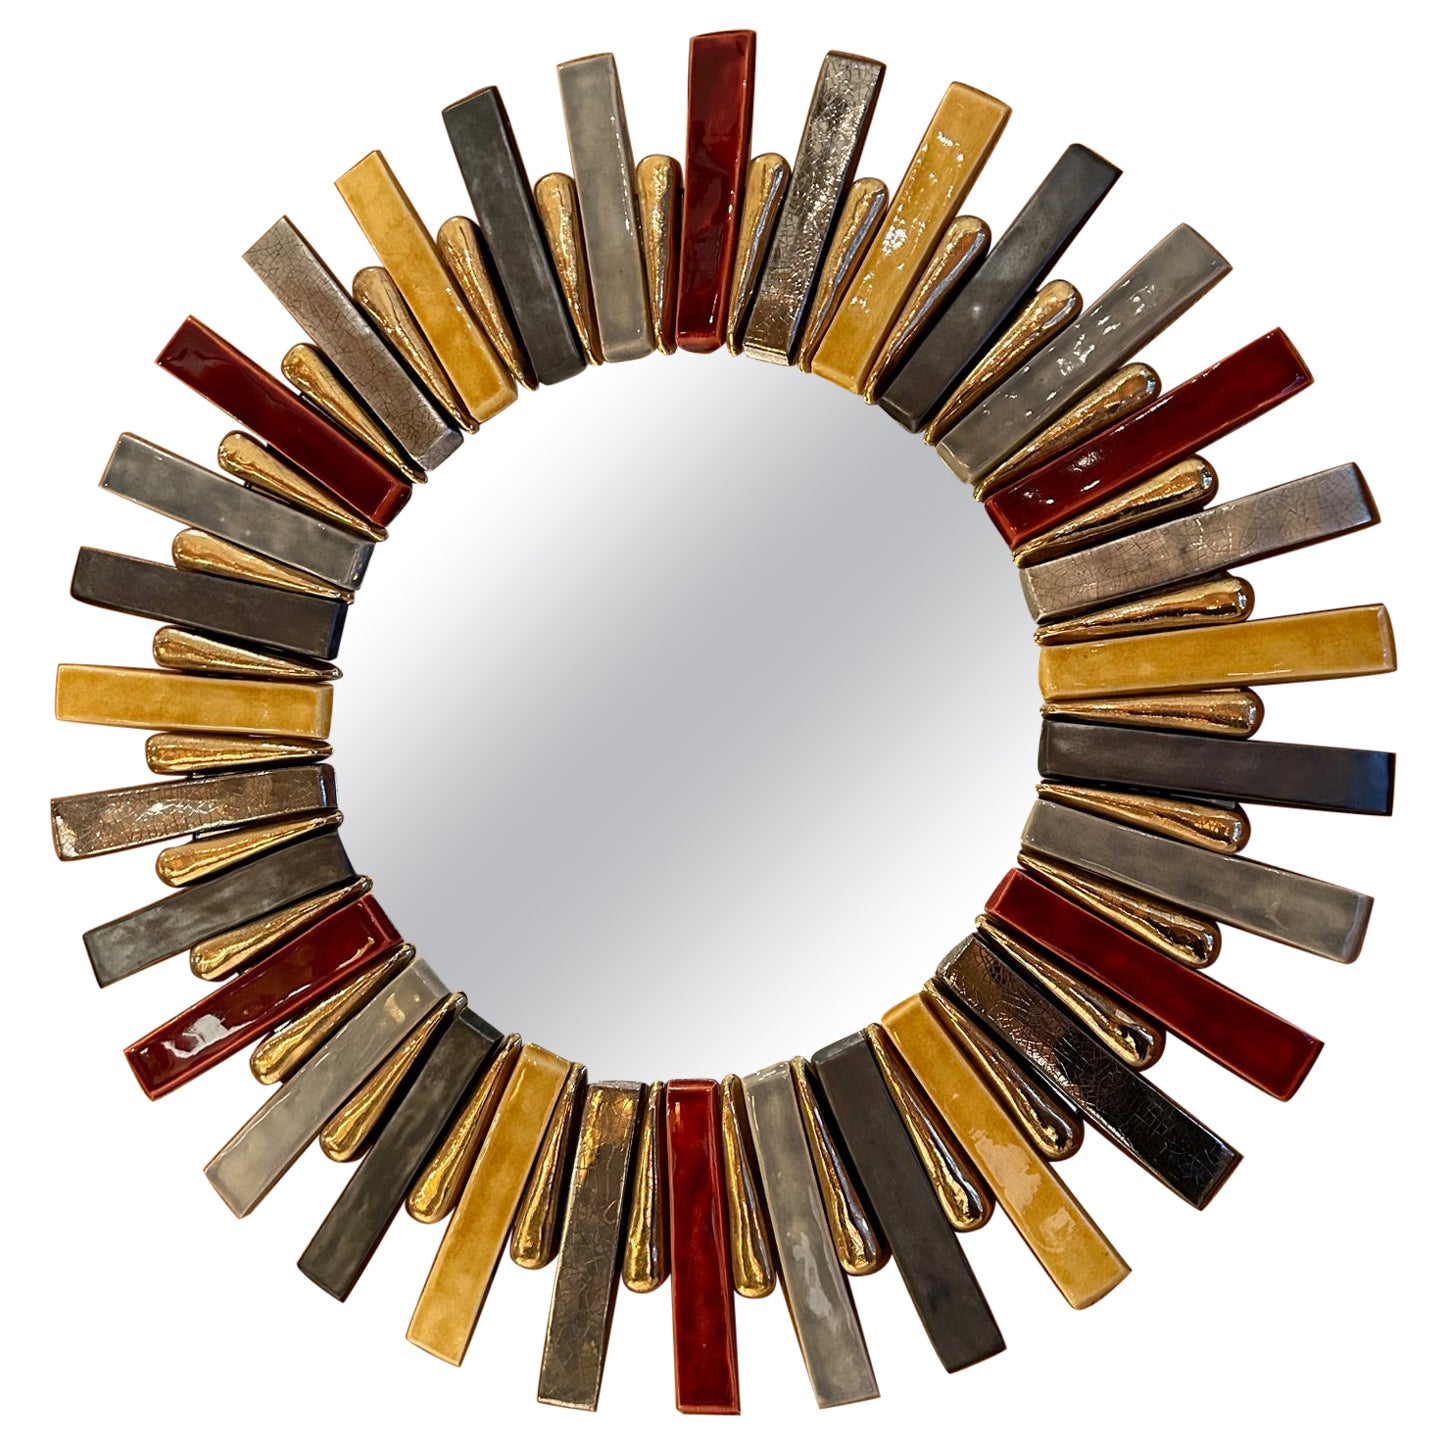 Circular ceramic mirror by Mithé Espelt